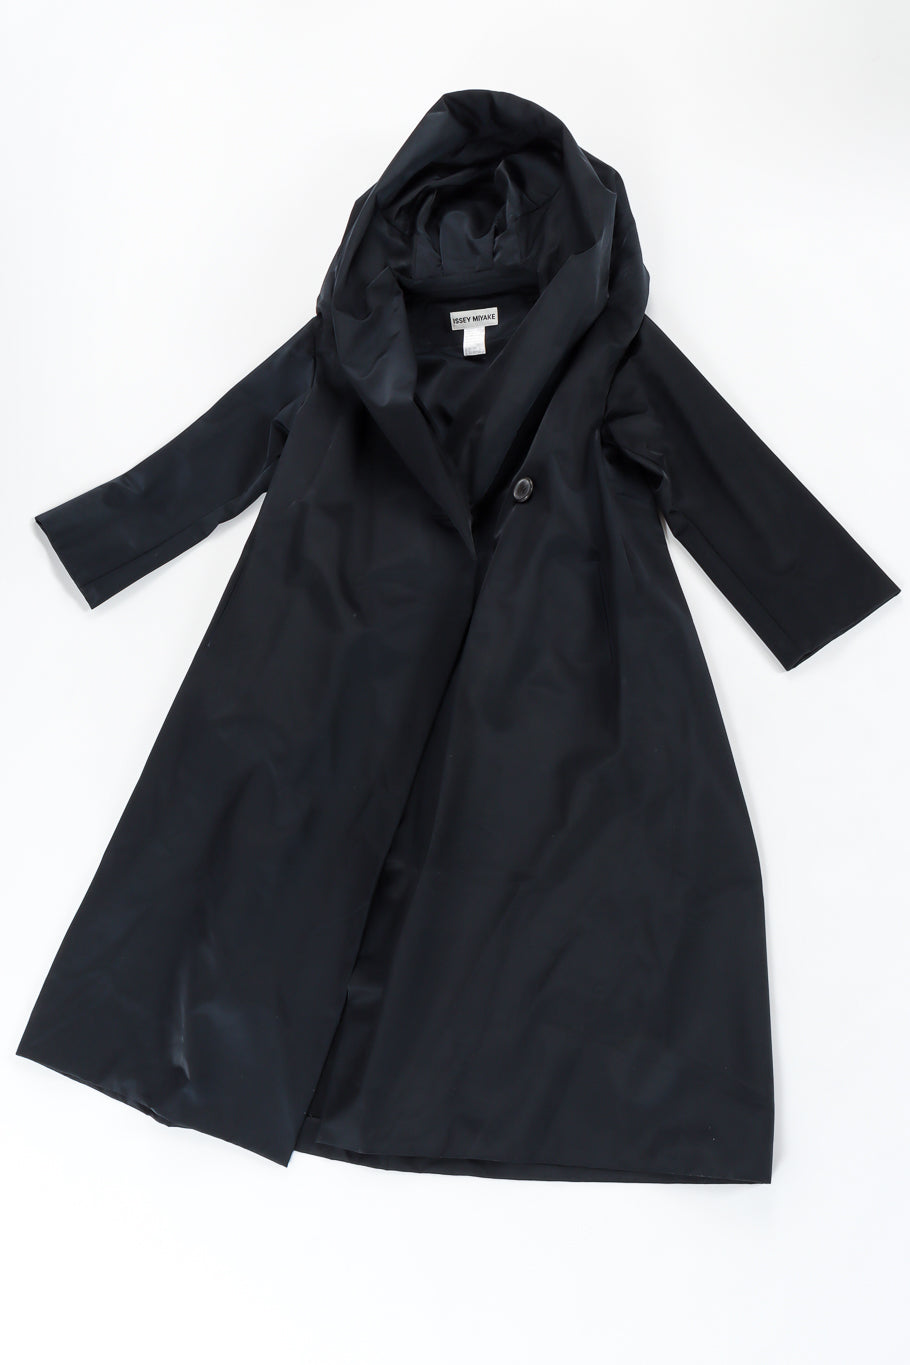 Vintage Issey Miyake Hooded Satin Overcoat coat flat lay @ Recess LA